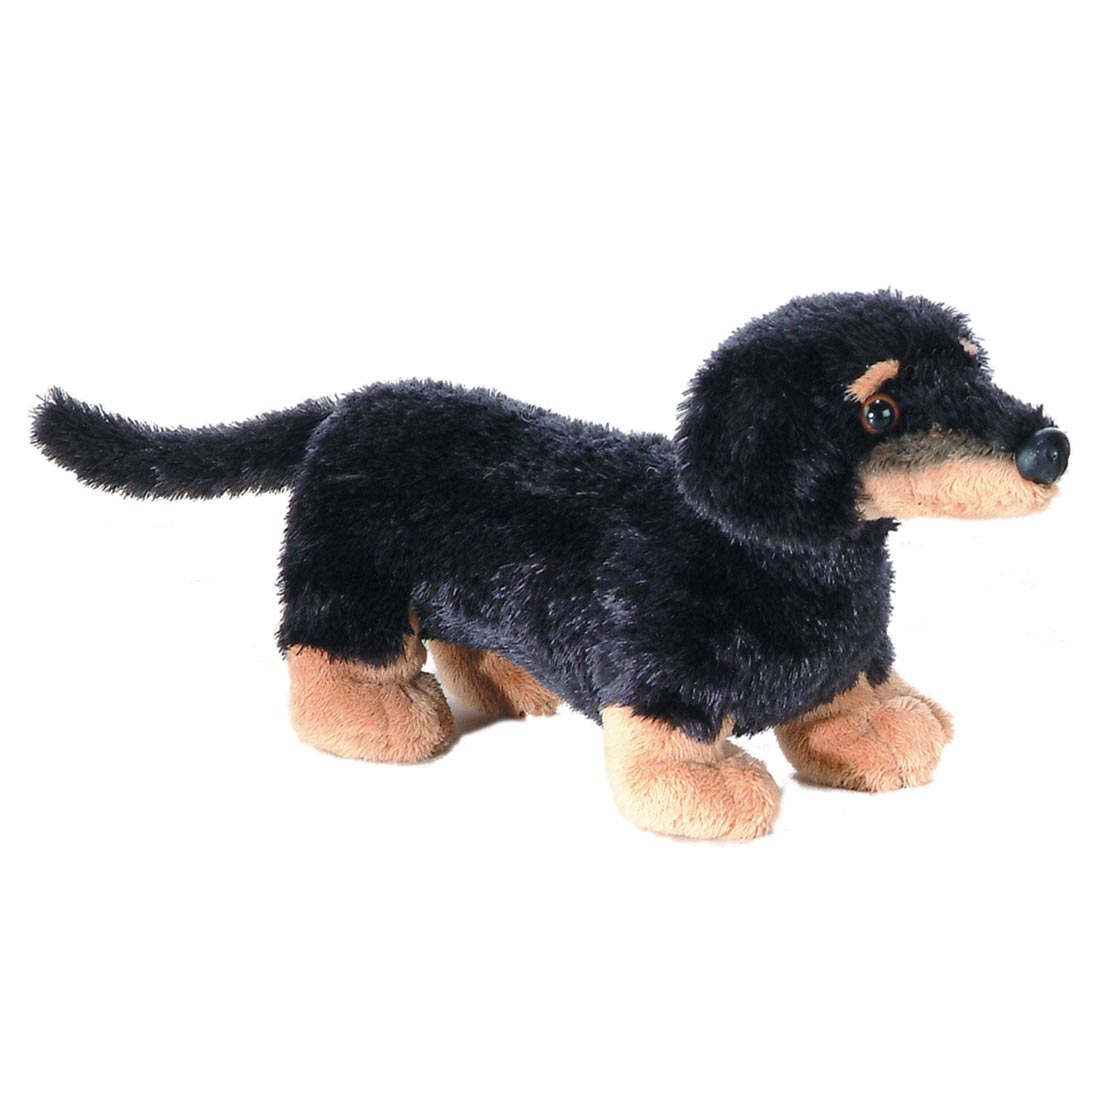 stuffed animal wiener dog